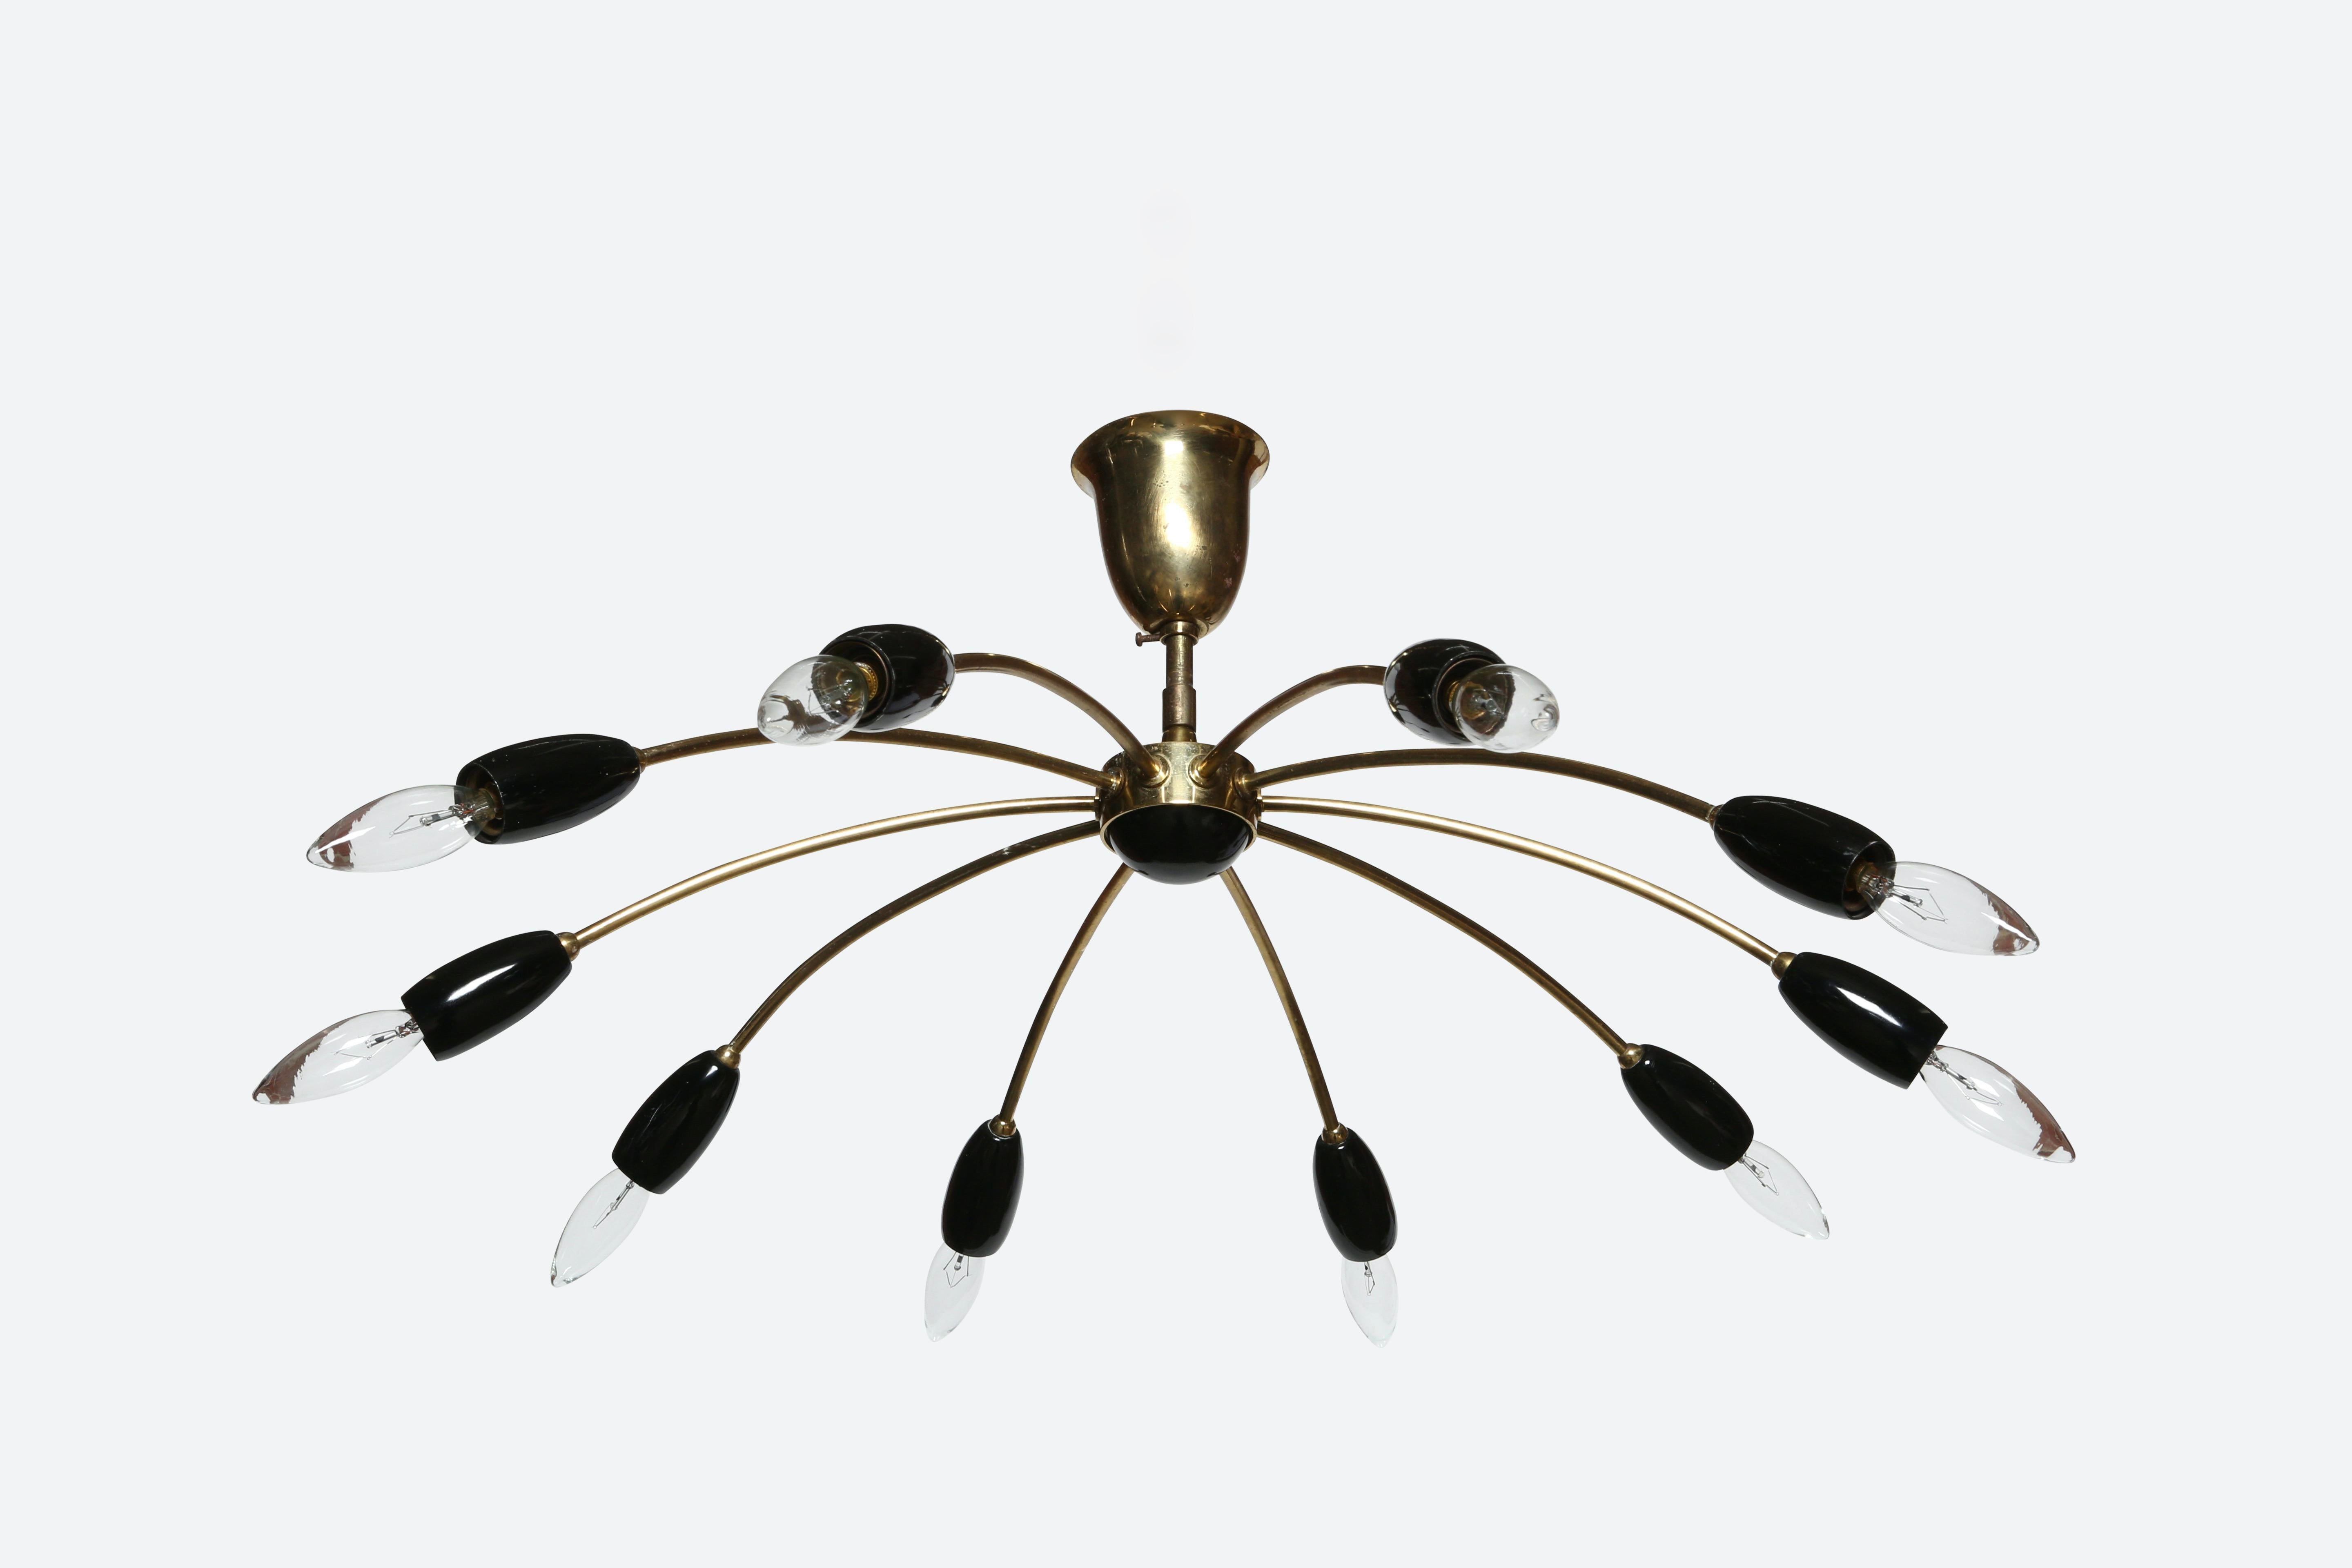 Sputnik brass chandelier
Germany 1960s
10 arms with candelabra sockets.